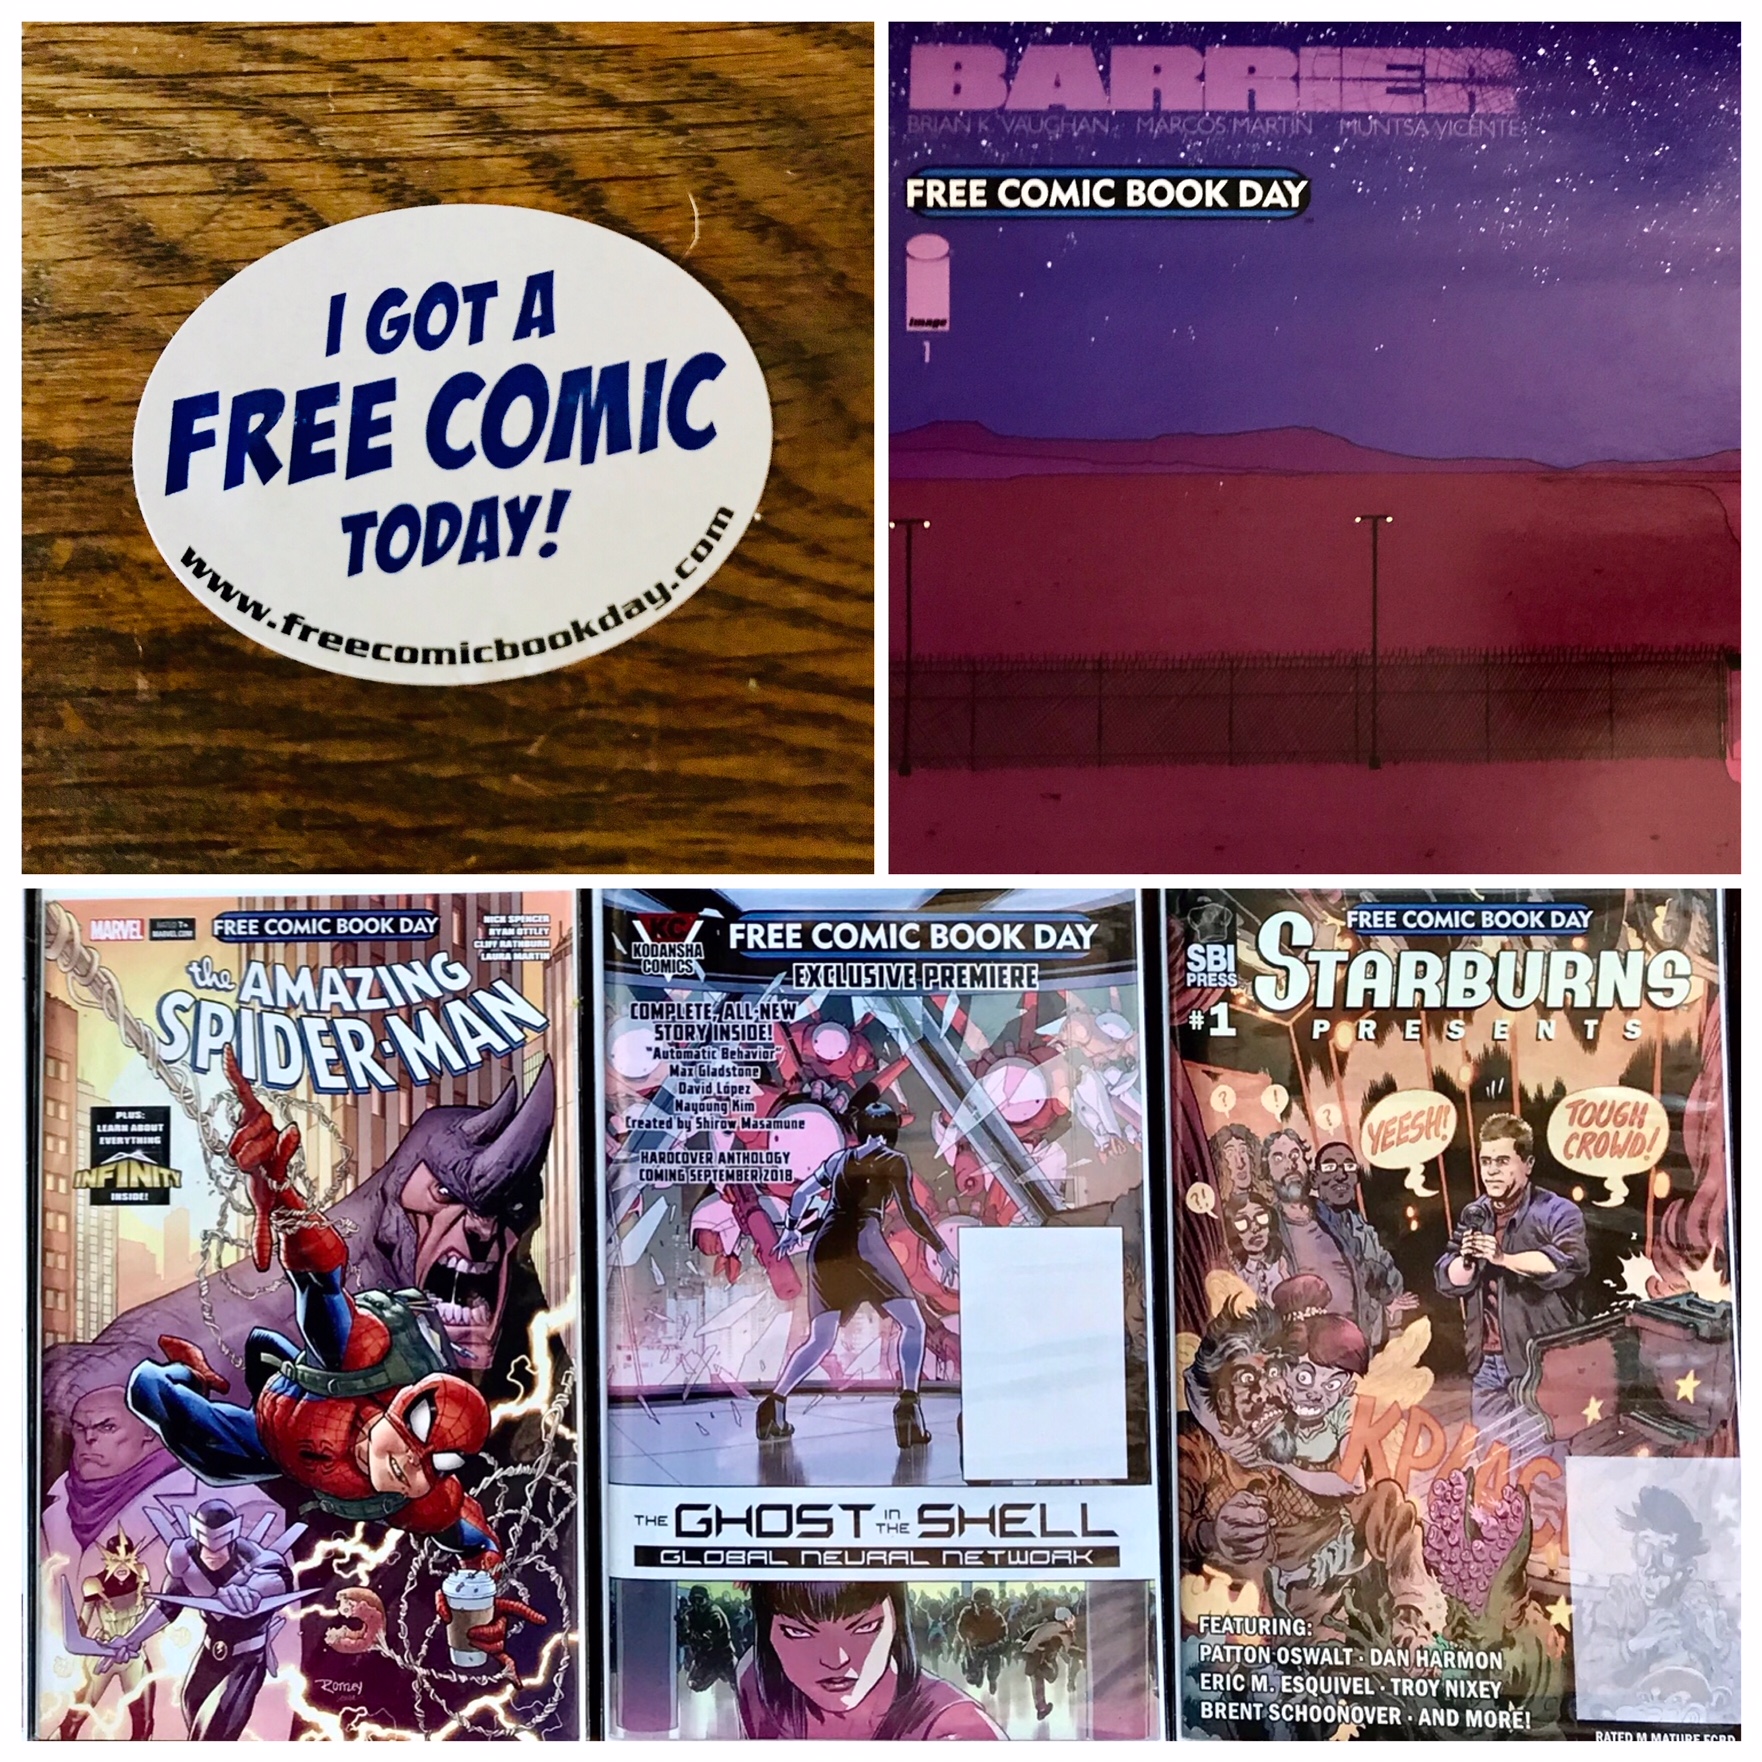 East side mags free comics